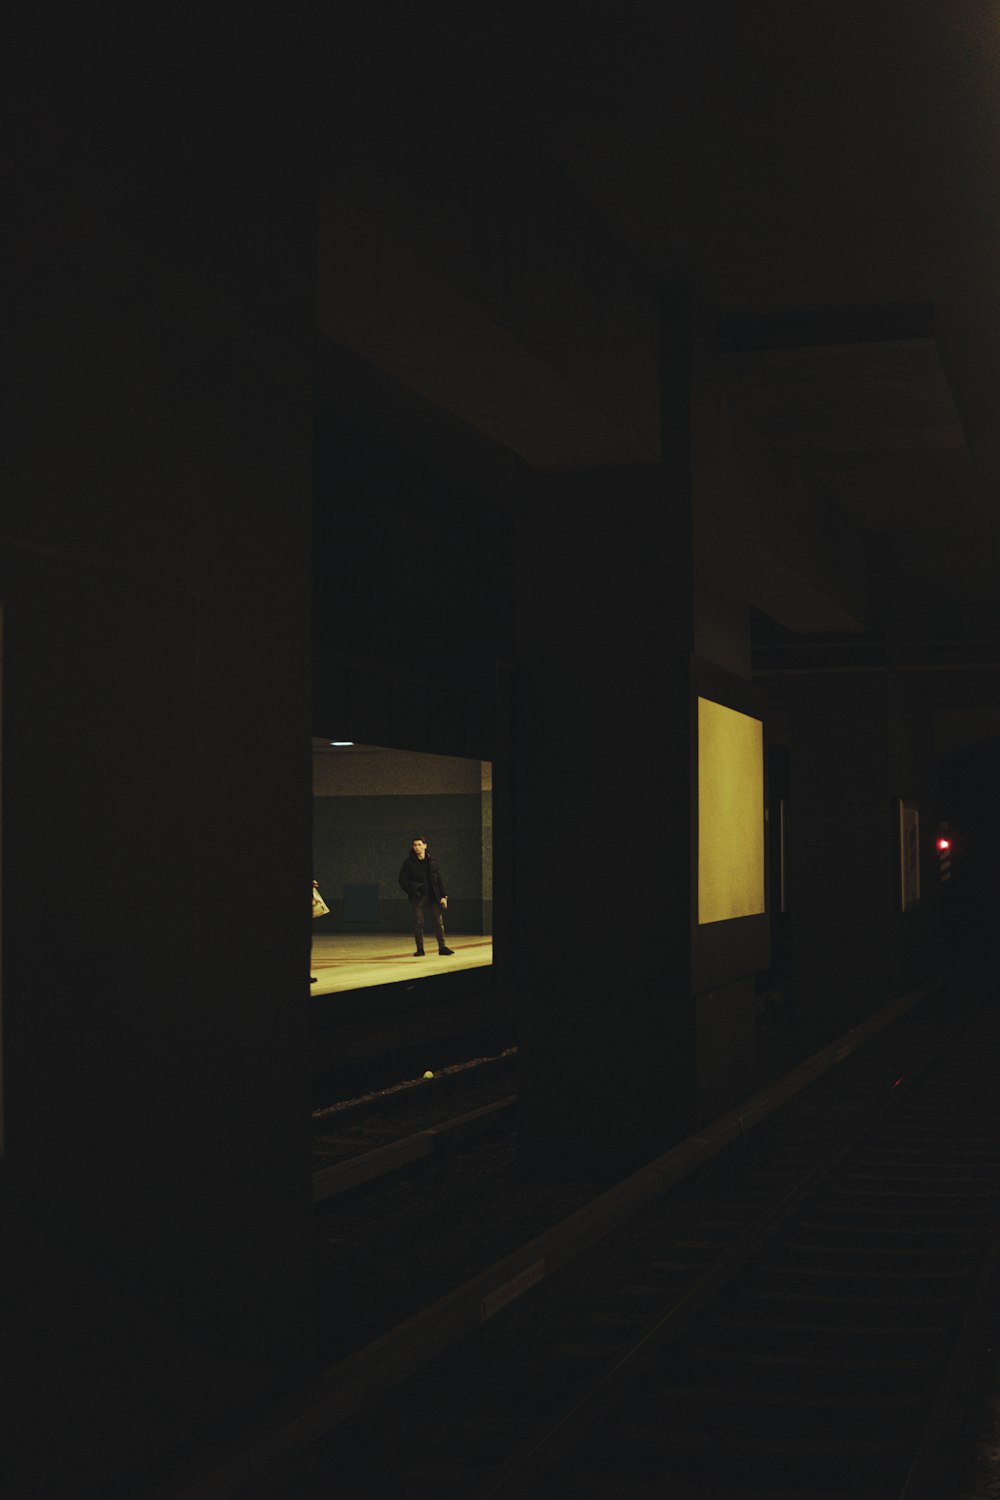 a person walking down a dark hallway at night